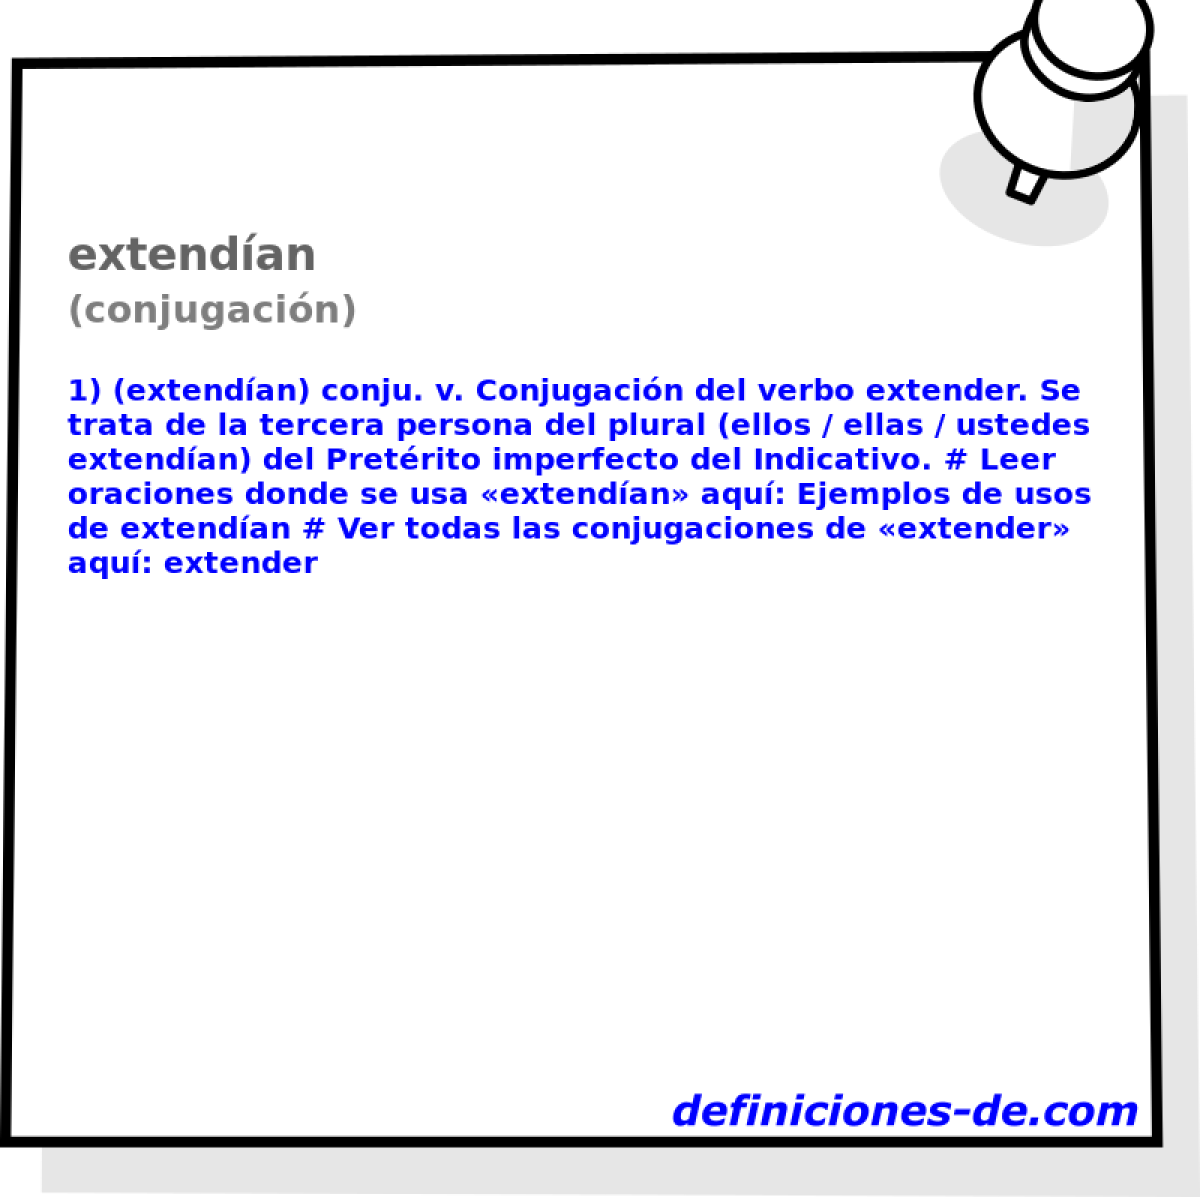 extendan (conjugacin)